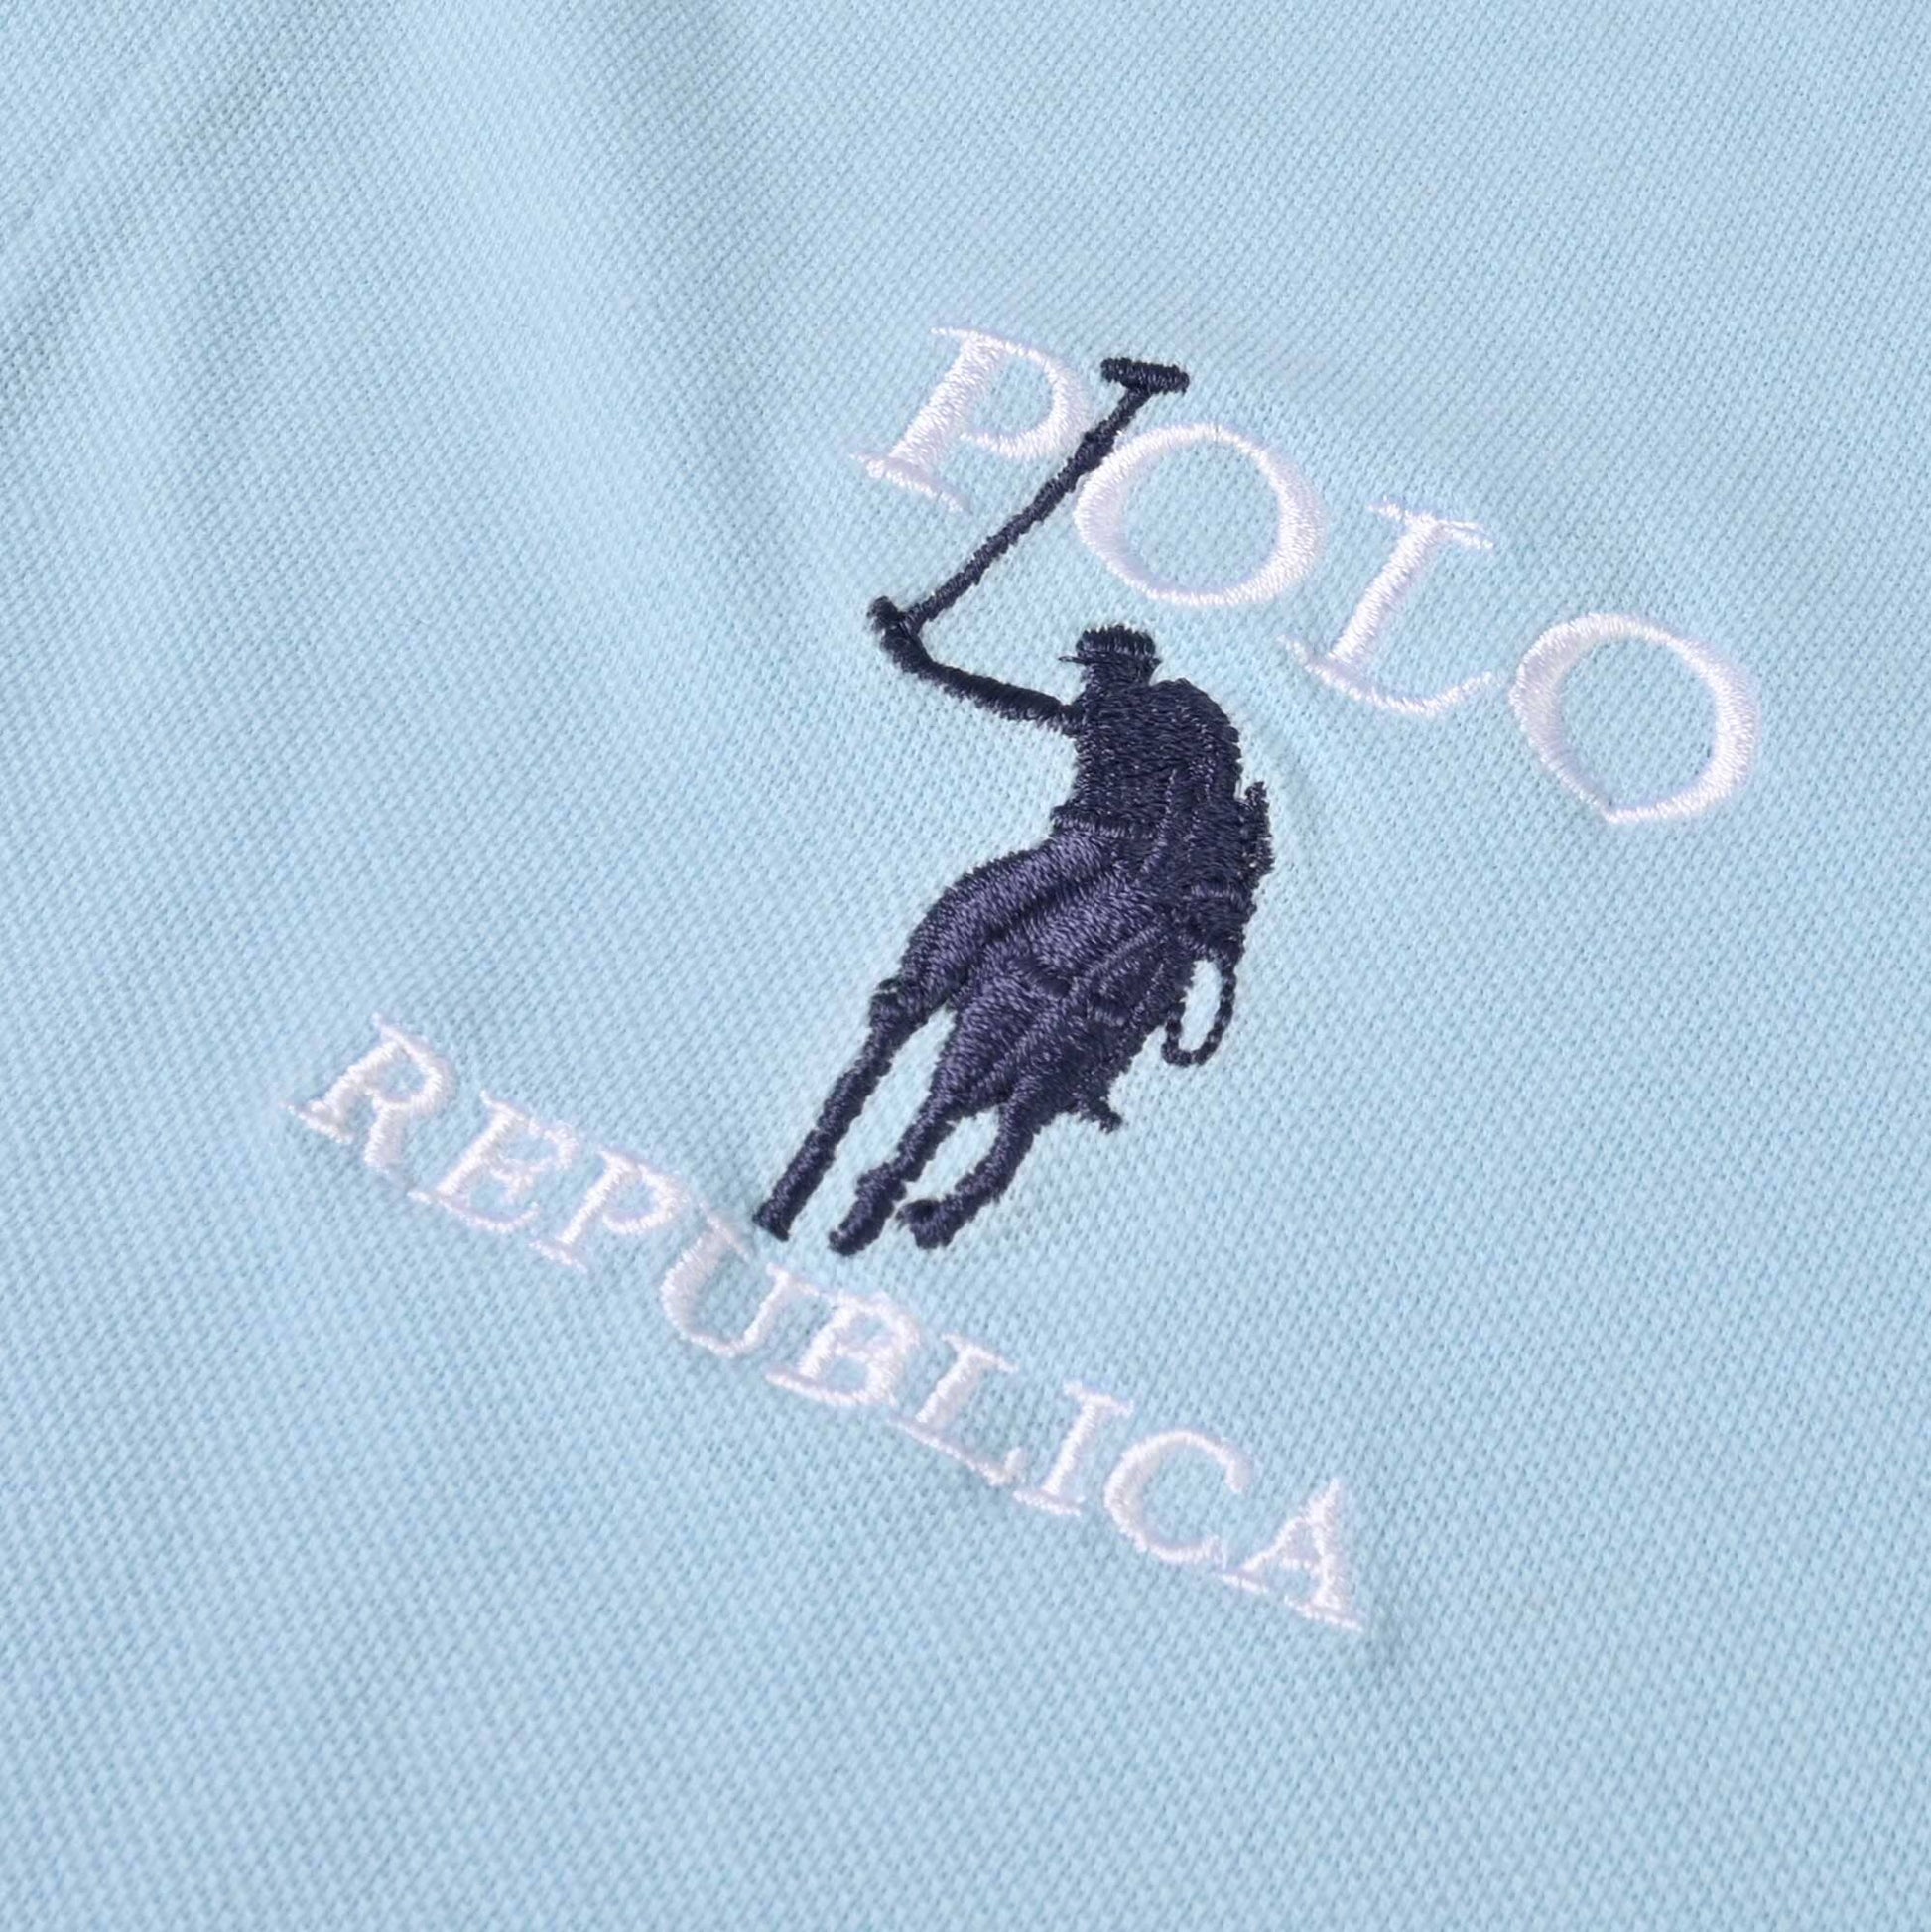 Polo Republica Men's Logo & 2 Flag Crest Embroidered Short Sleeve Polo Shirt Men's Polo Shirt Polo Republica 